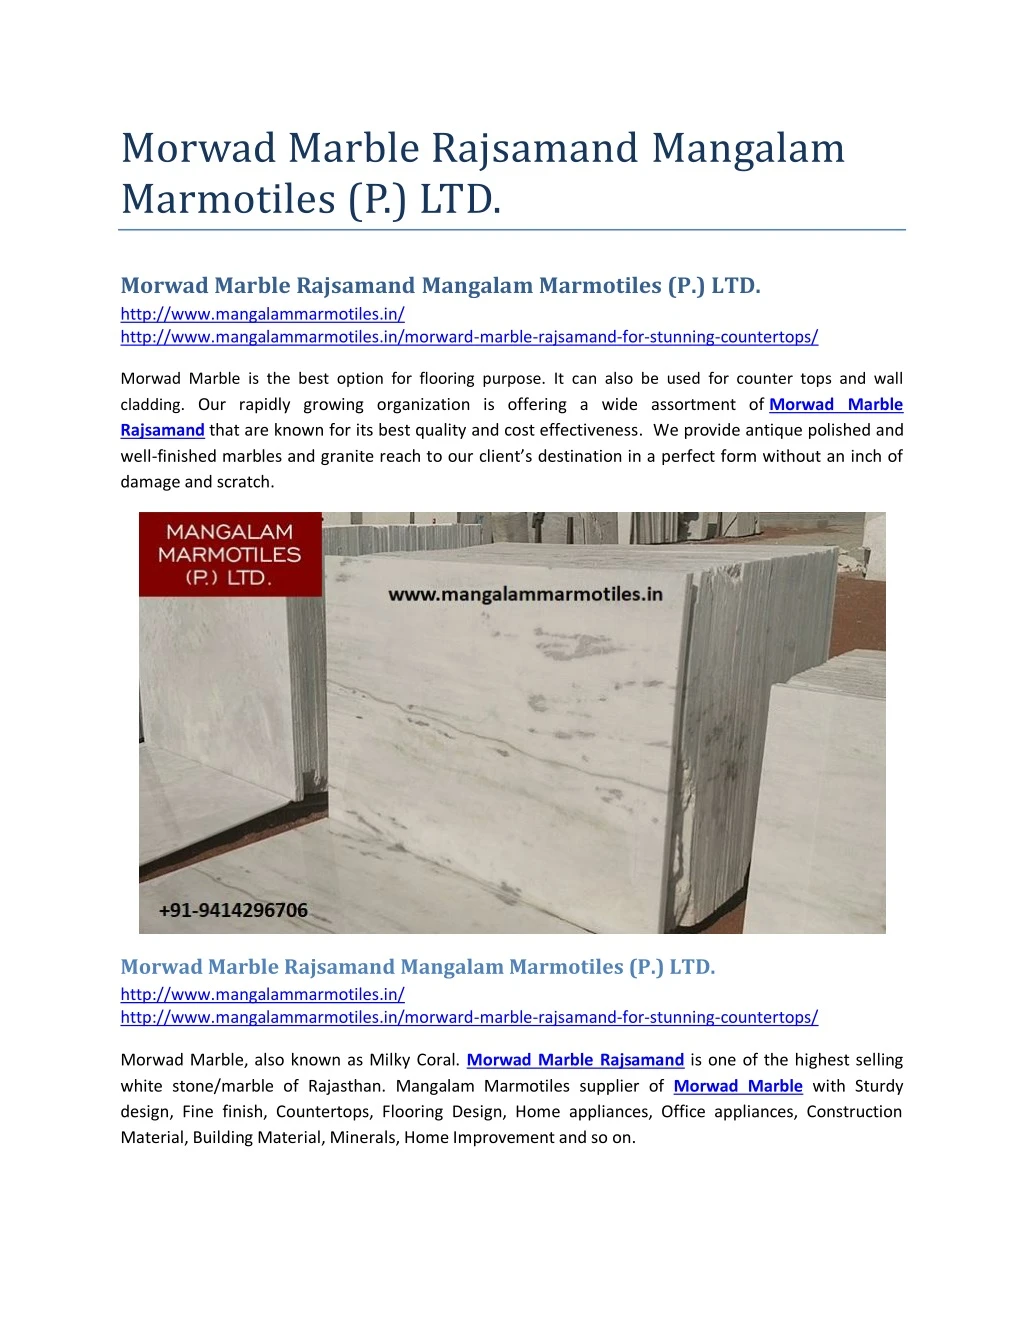 morwad marble rajsamand mangalam marmotiles p ltd